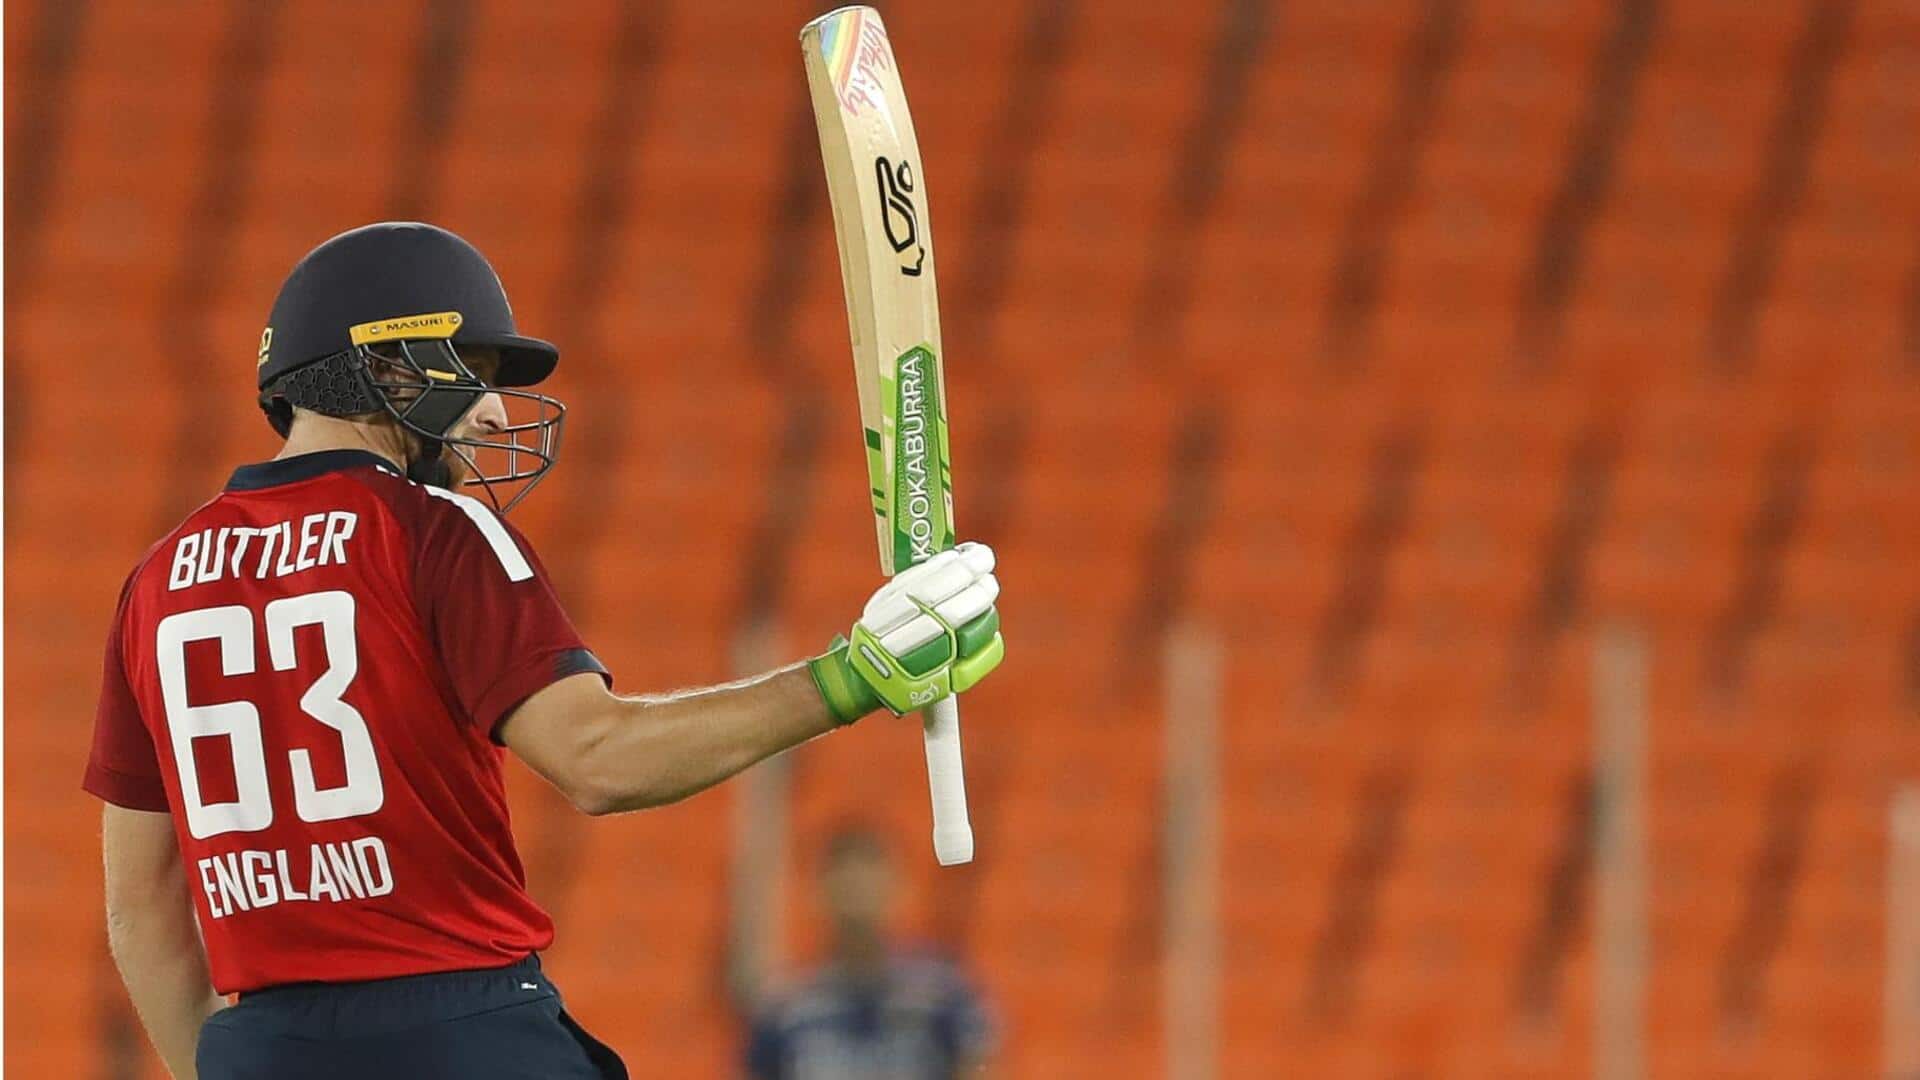 West Indies vs England T20I series: Decoding key player battles